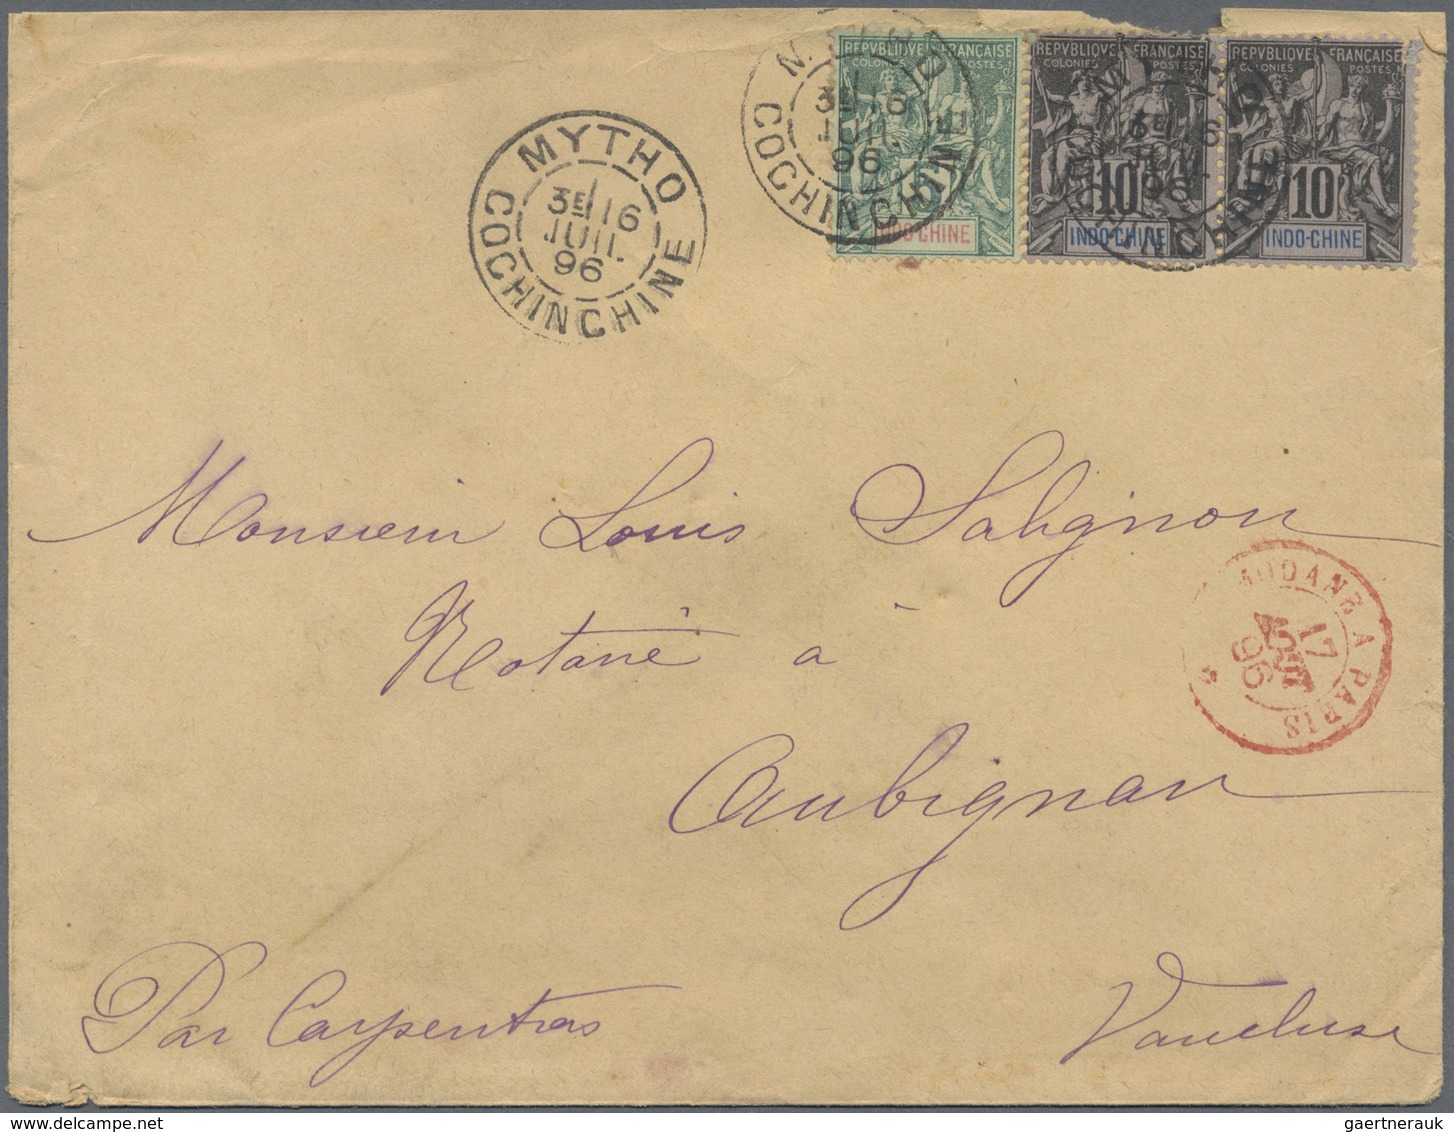 Br Französisch-Indochina: 1890/1901, correspondence  of 28 covers from Cochinchine to Aubignan/Vaucluse